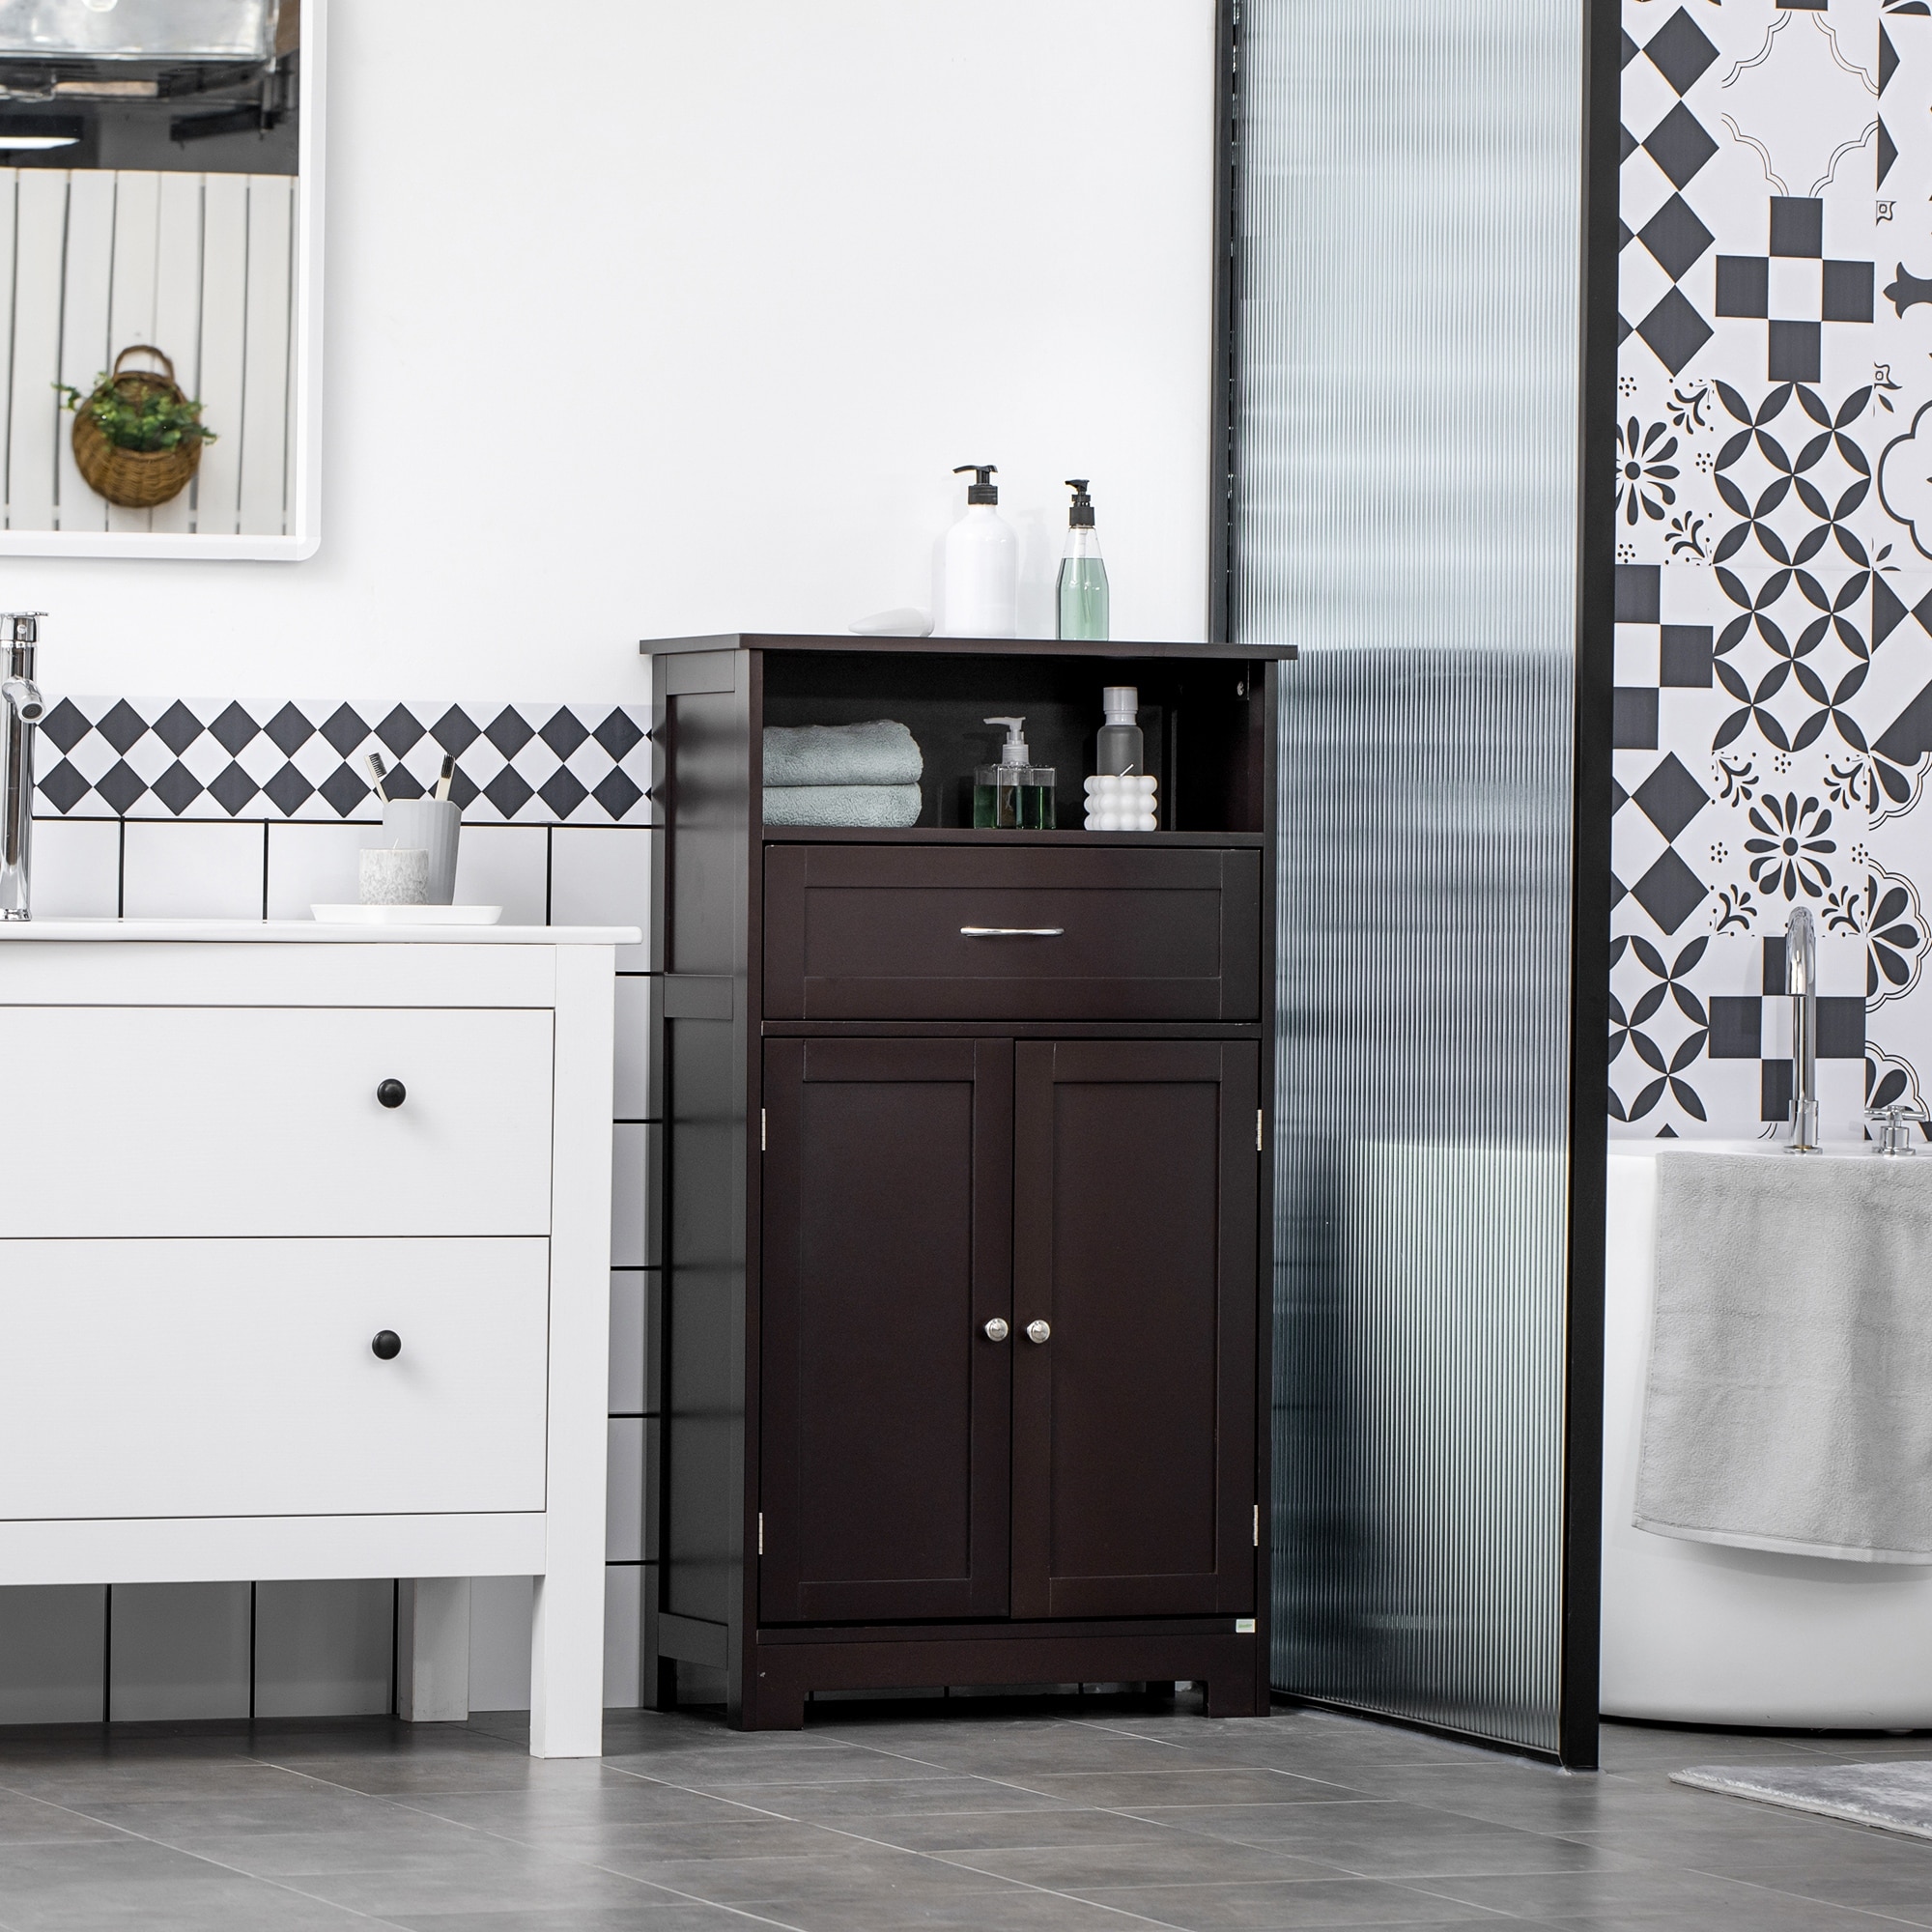 kleankin Modern Bathroom Storage Cabinet Free Standing Cupboard with Drawer and Adjustable Shelf, White